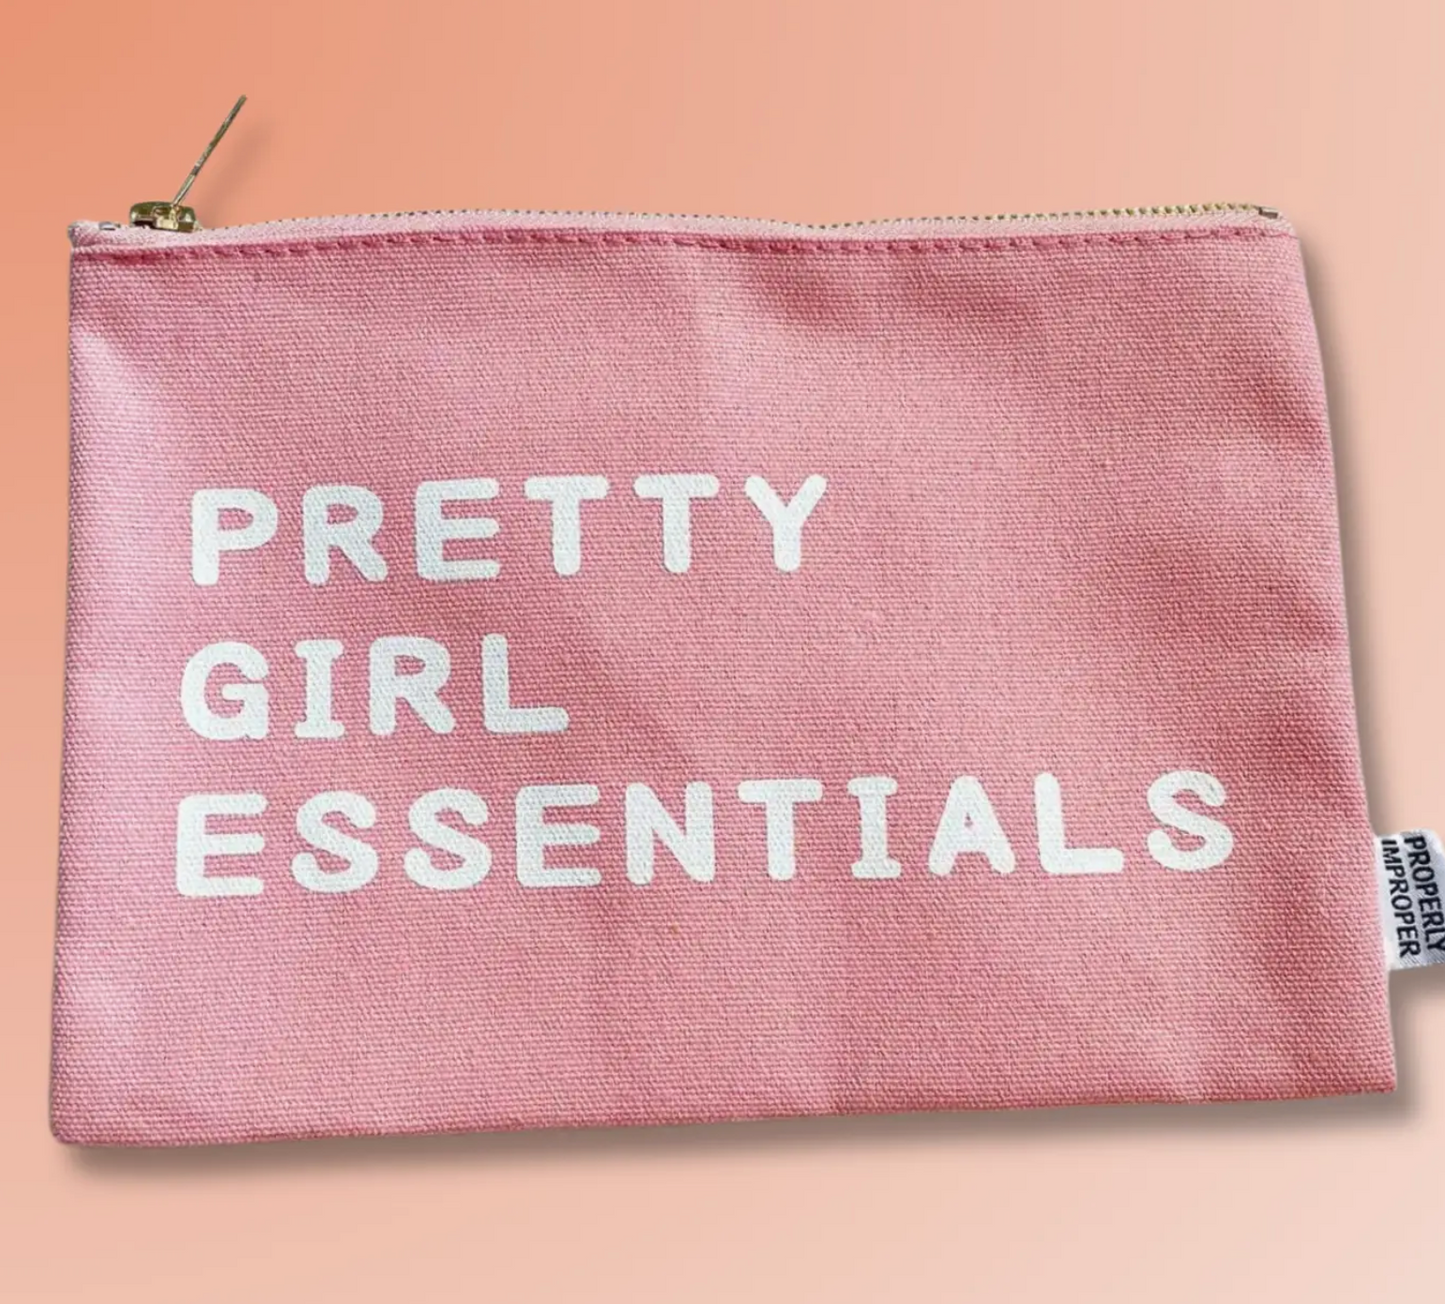 Pretty Girl Essentials Pouch